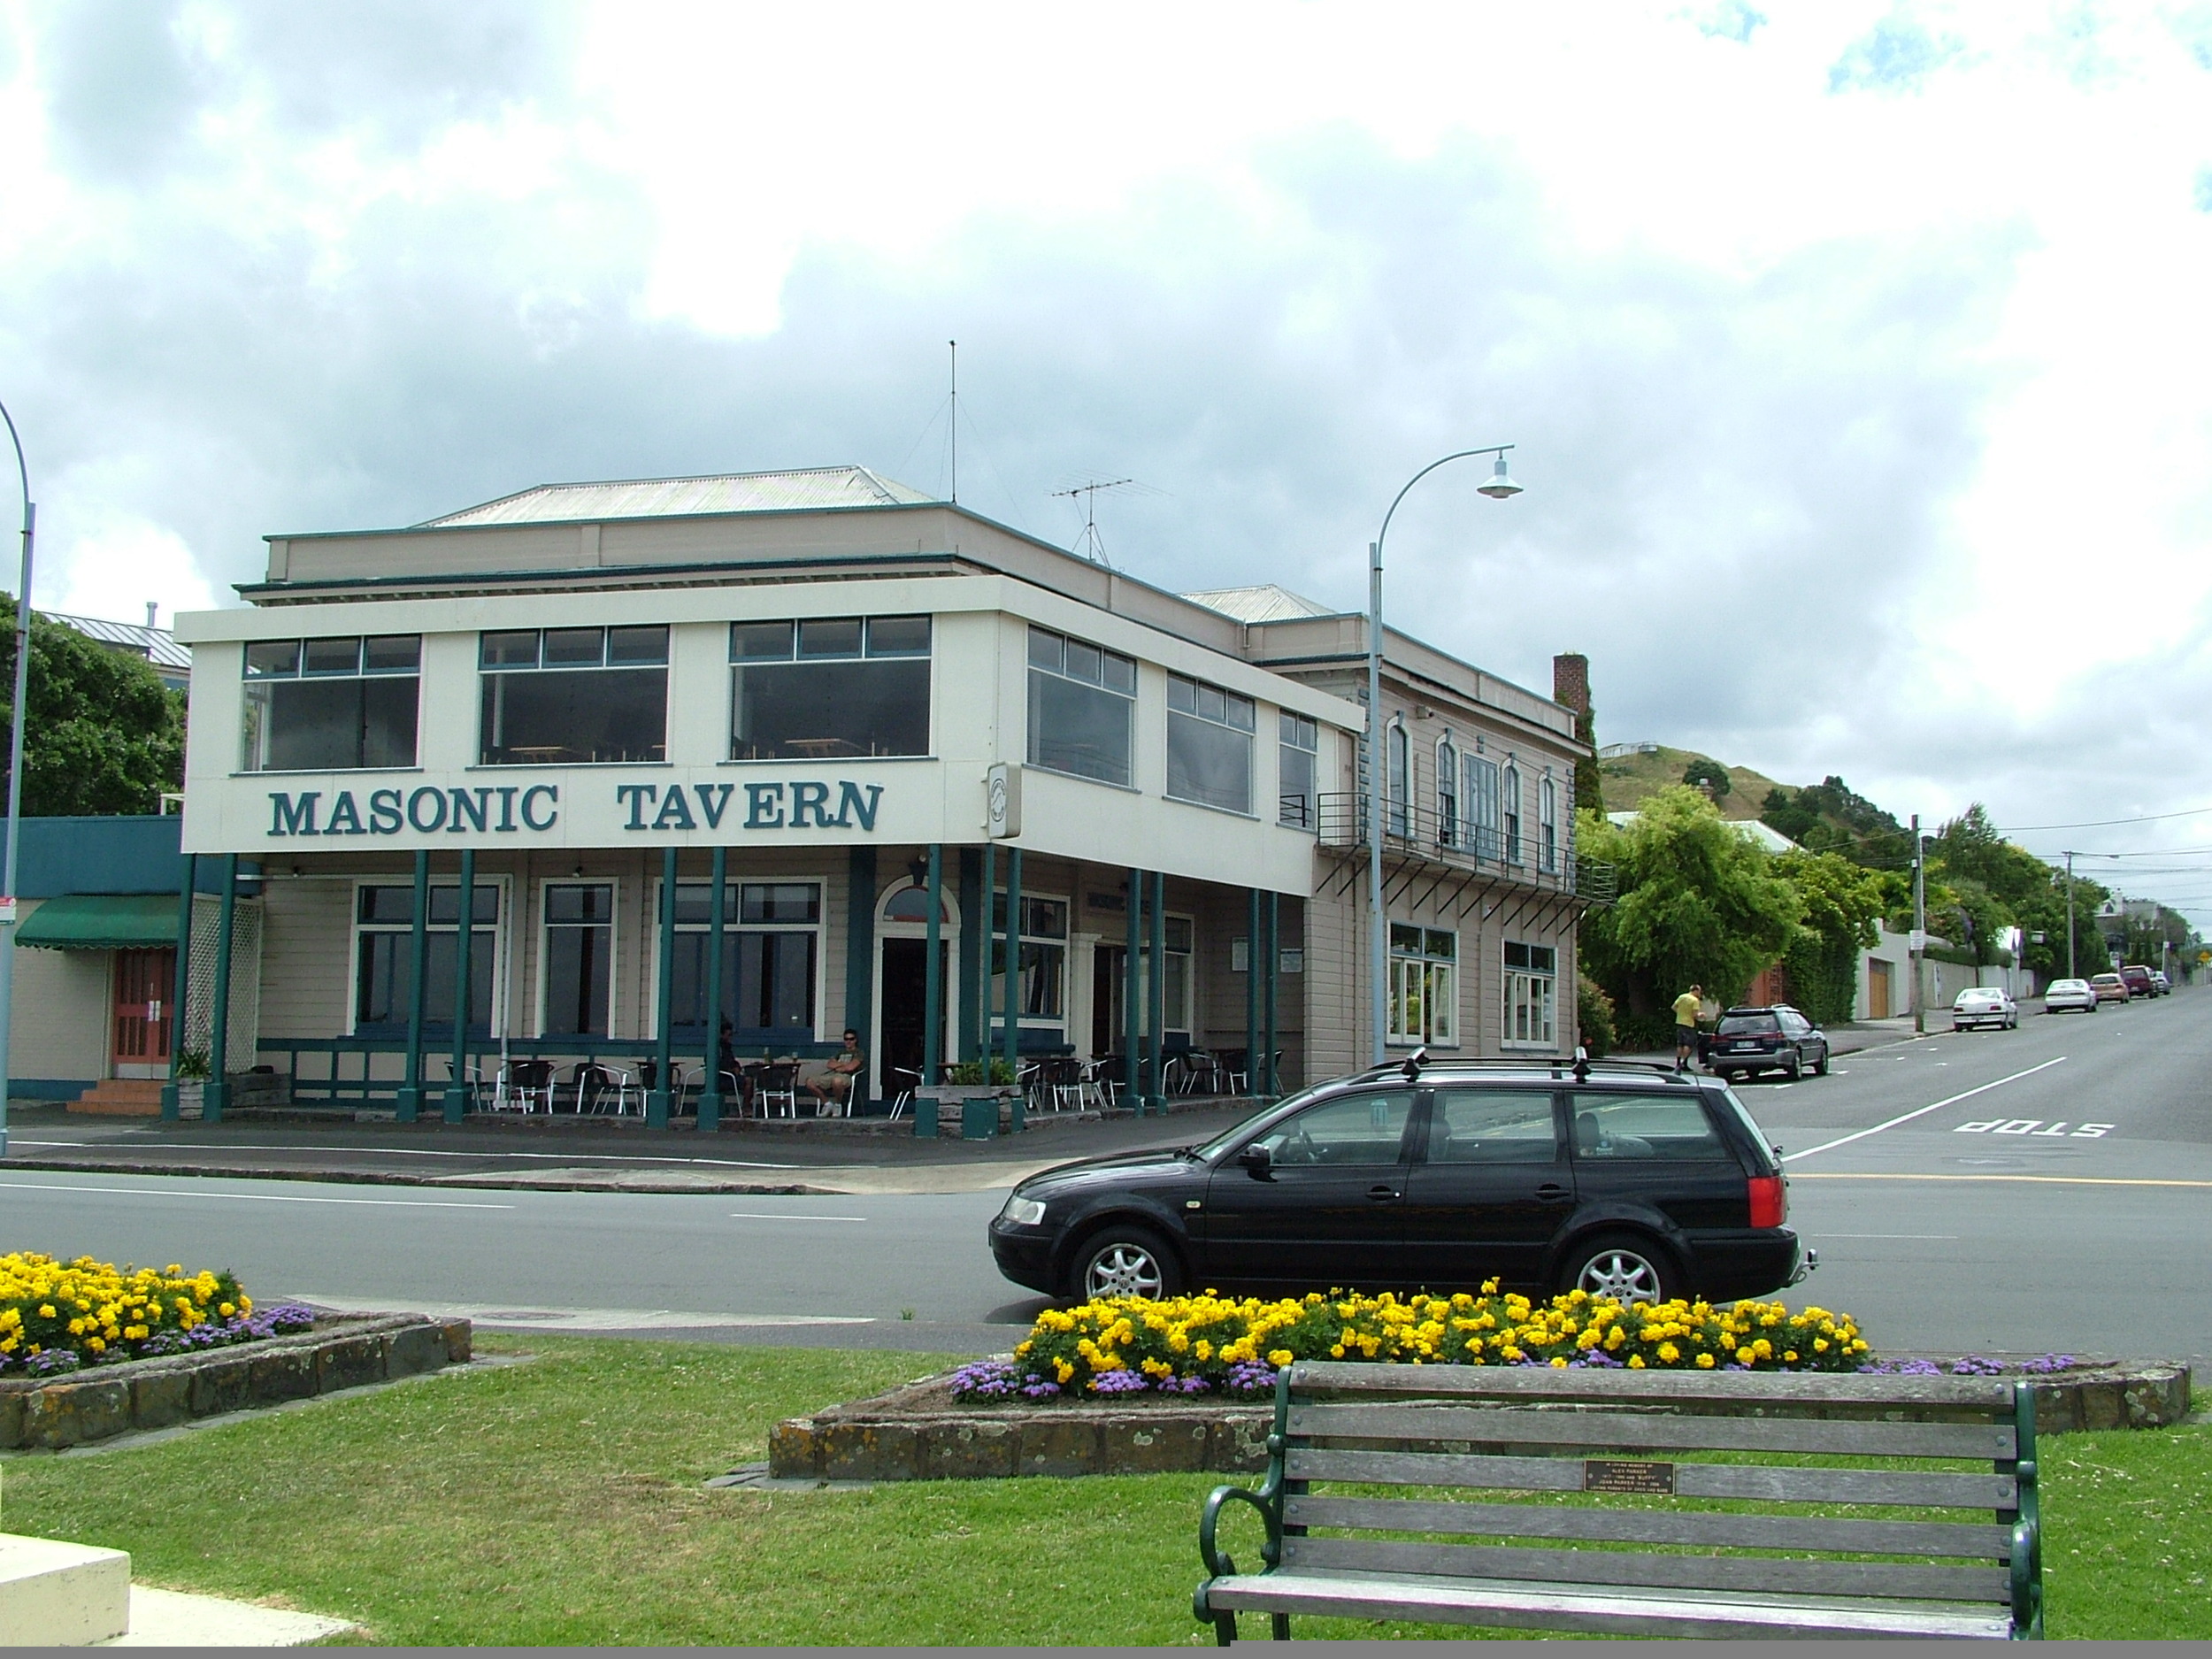 The Masonic tavern